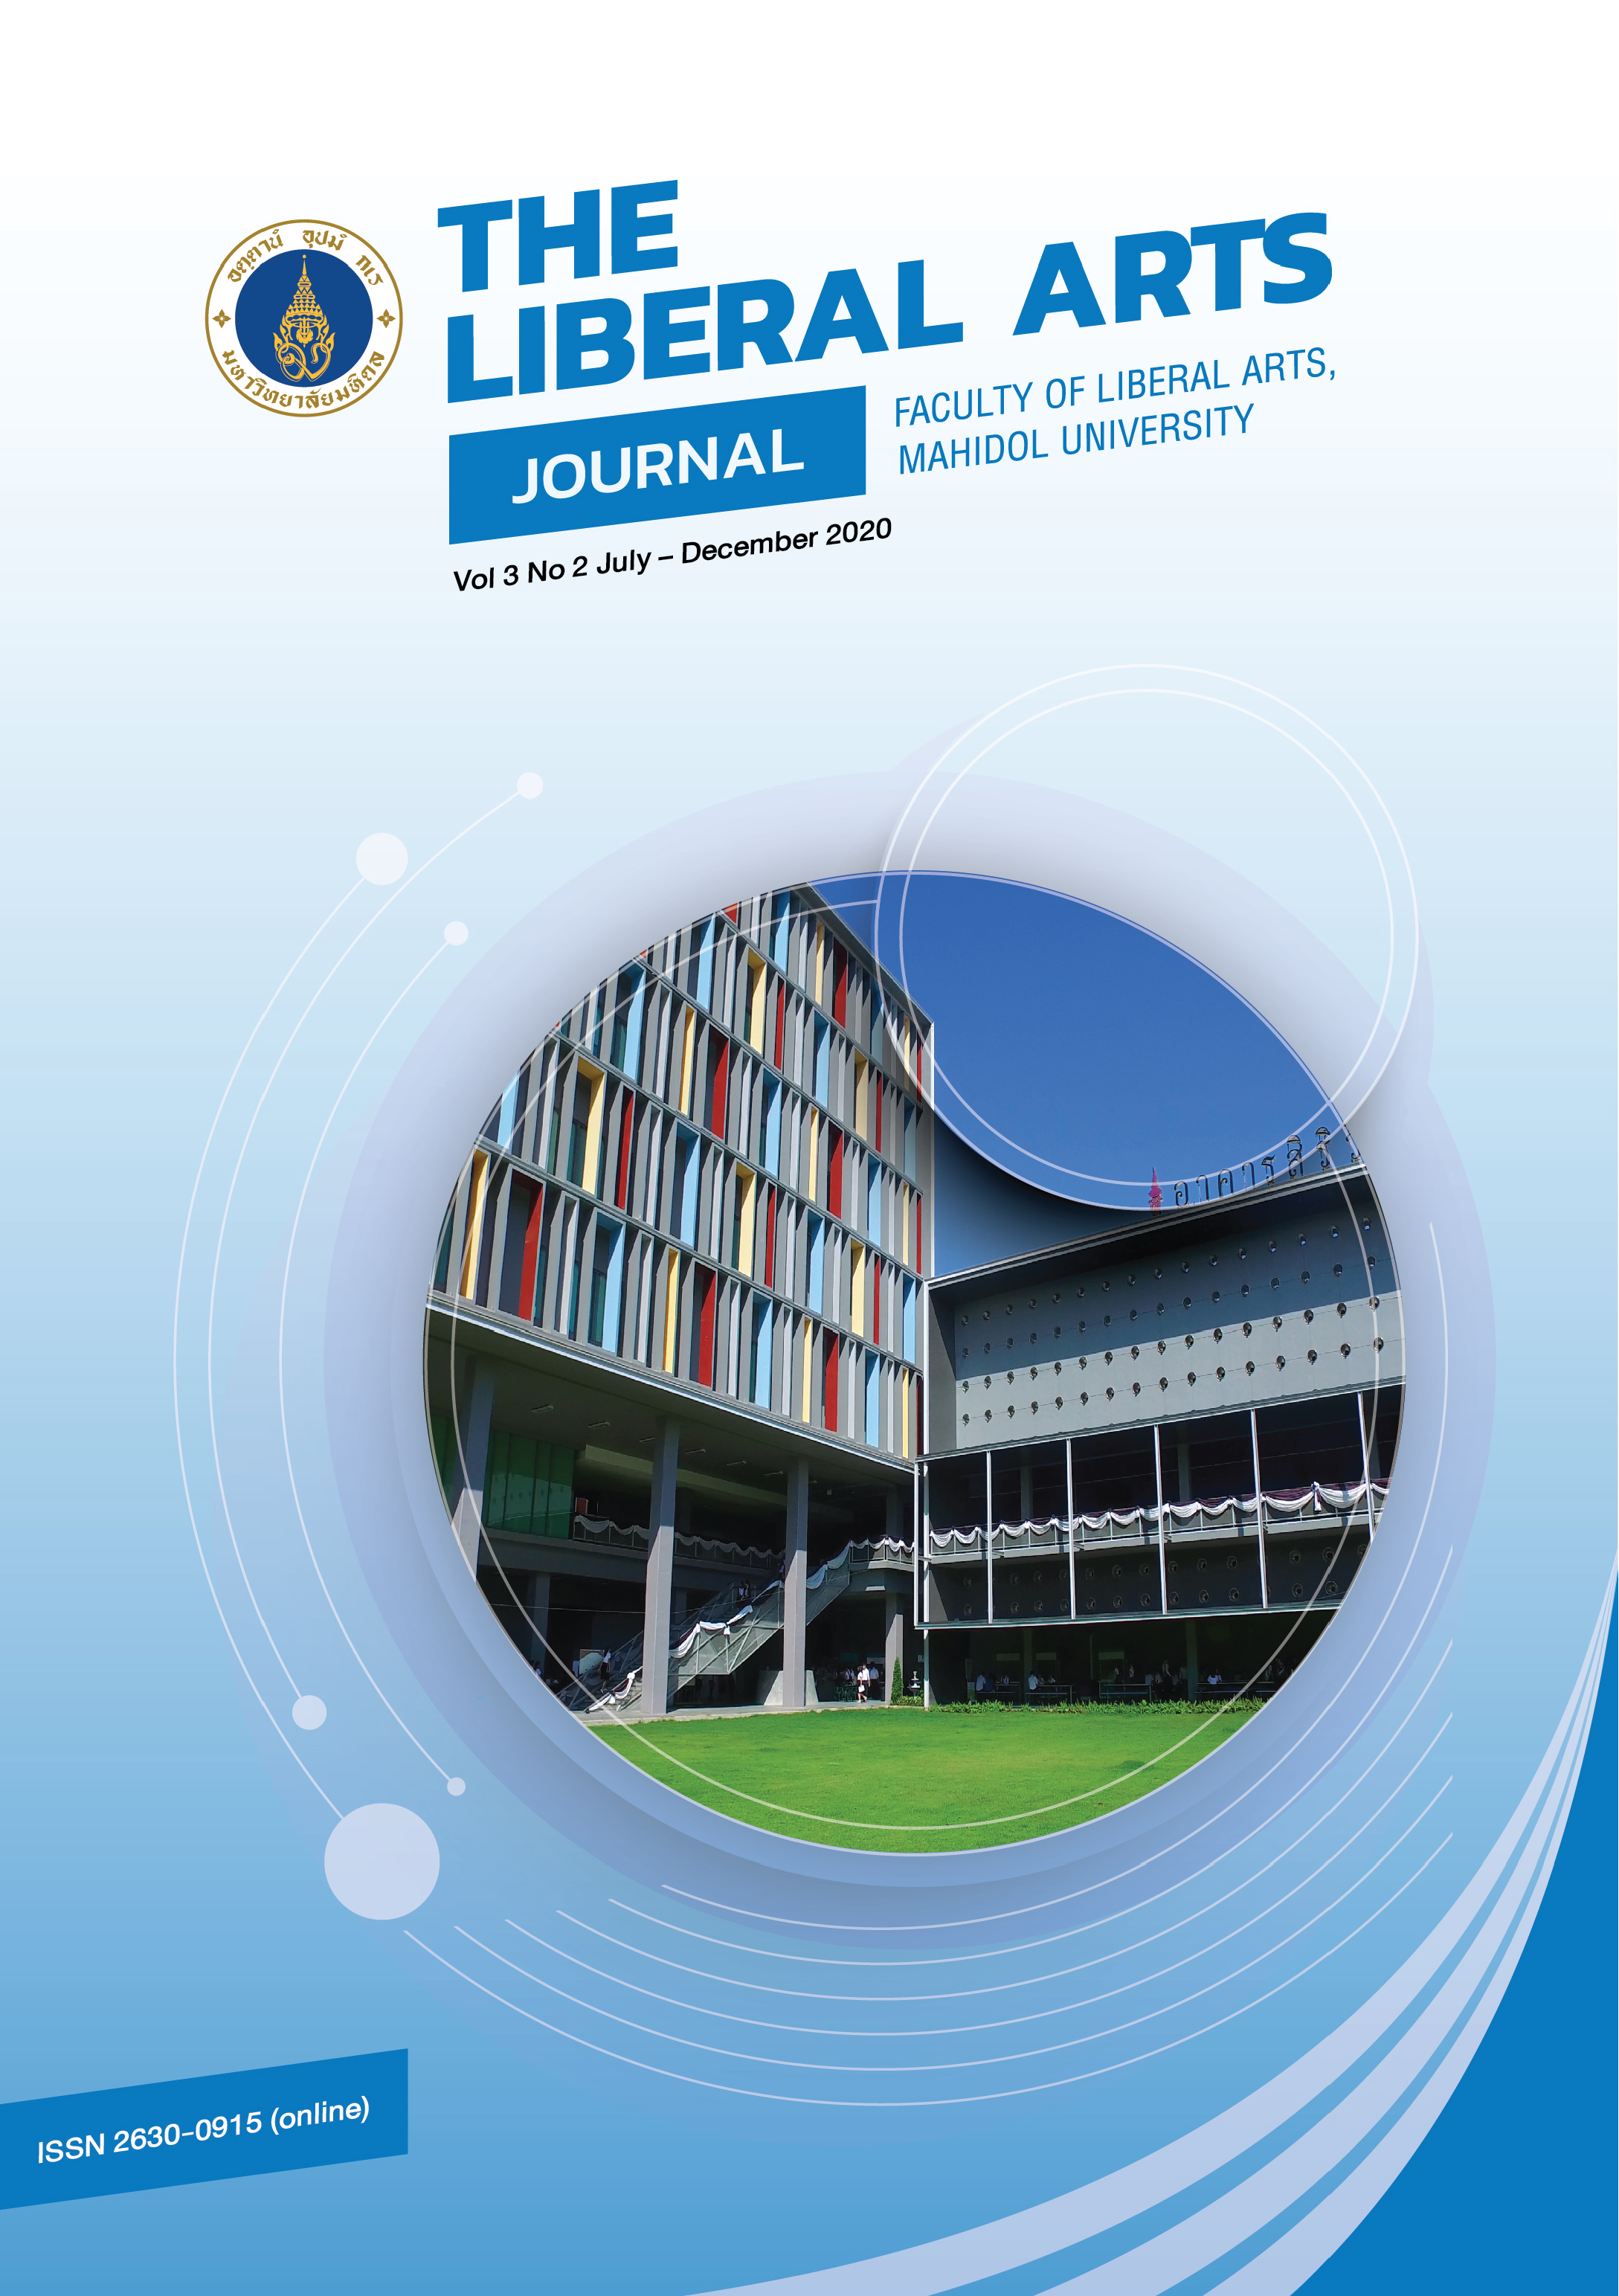 					View Vol. 3 No. 2 (2020): The Liberal Arts Journal, Mahidol University
				